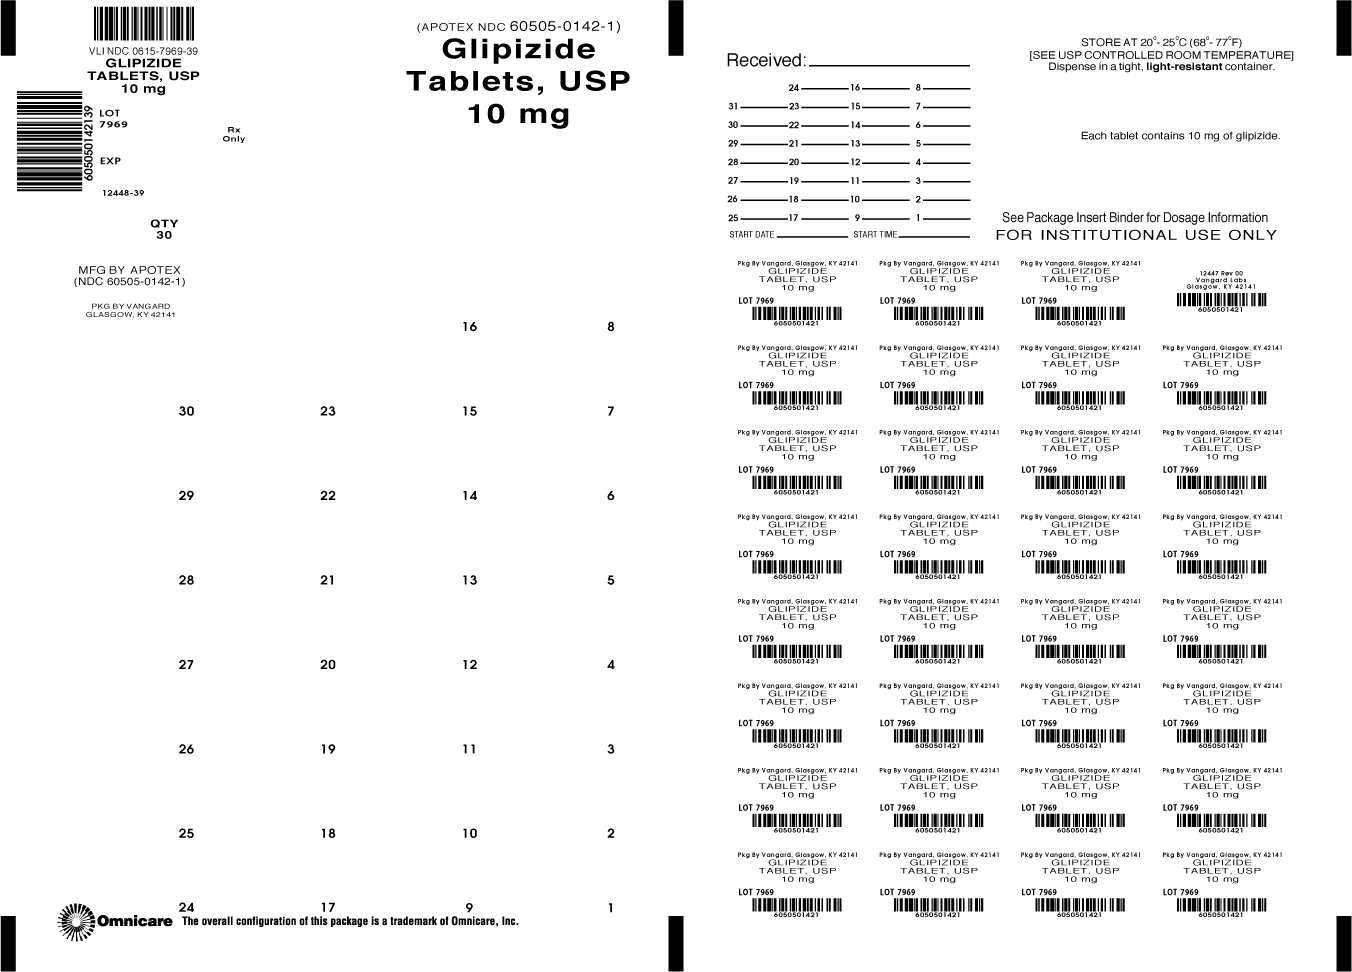 Glipizide Tabs, USP 10mg blistercard labels